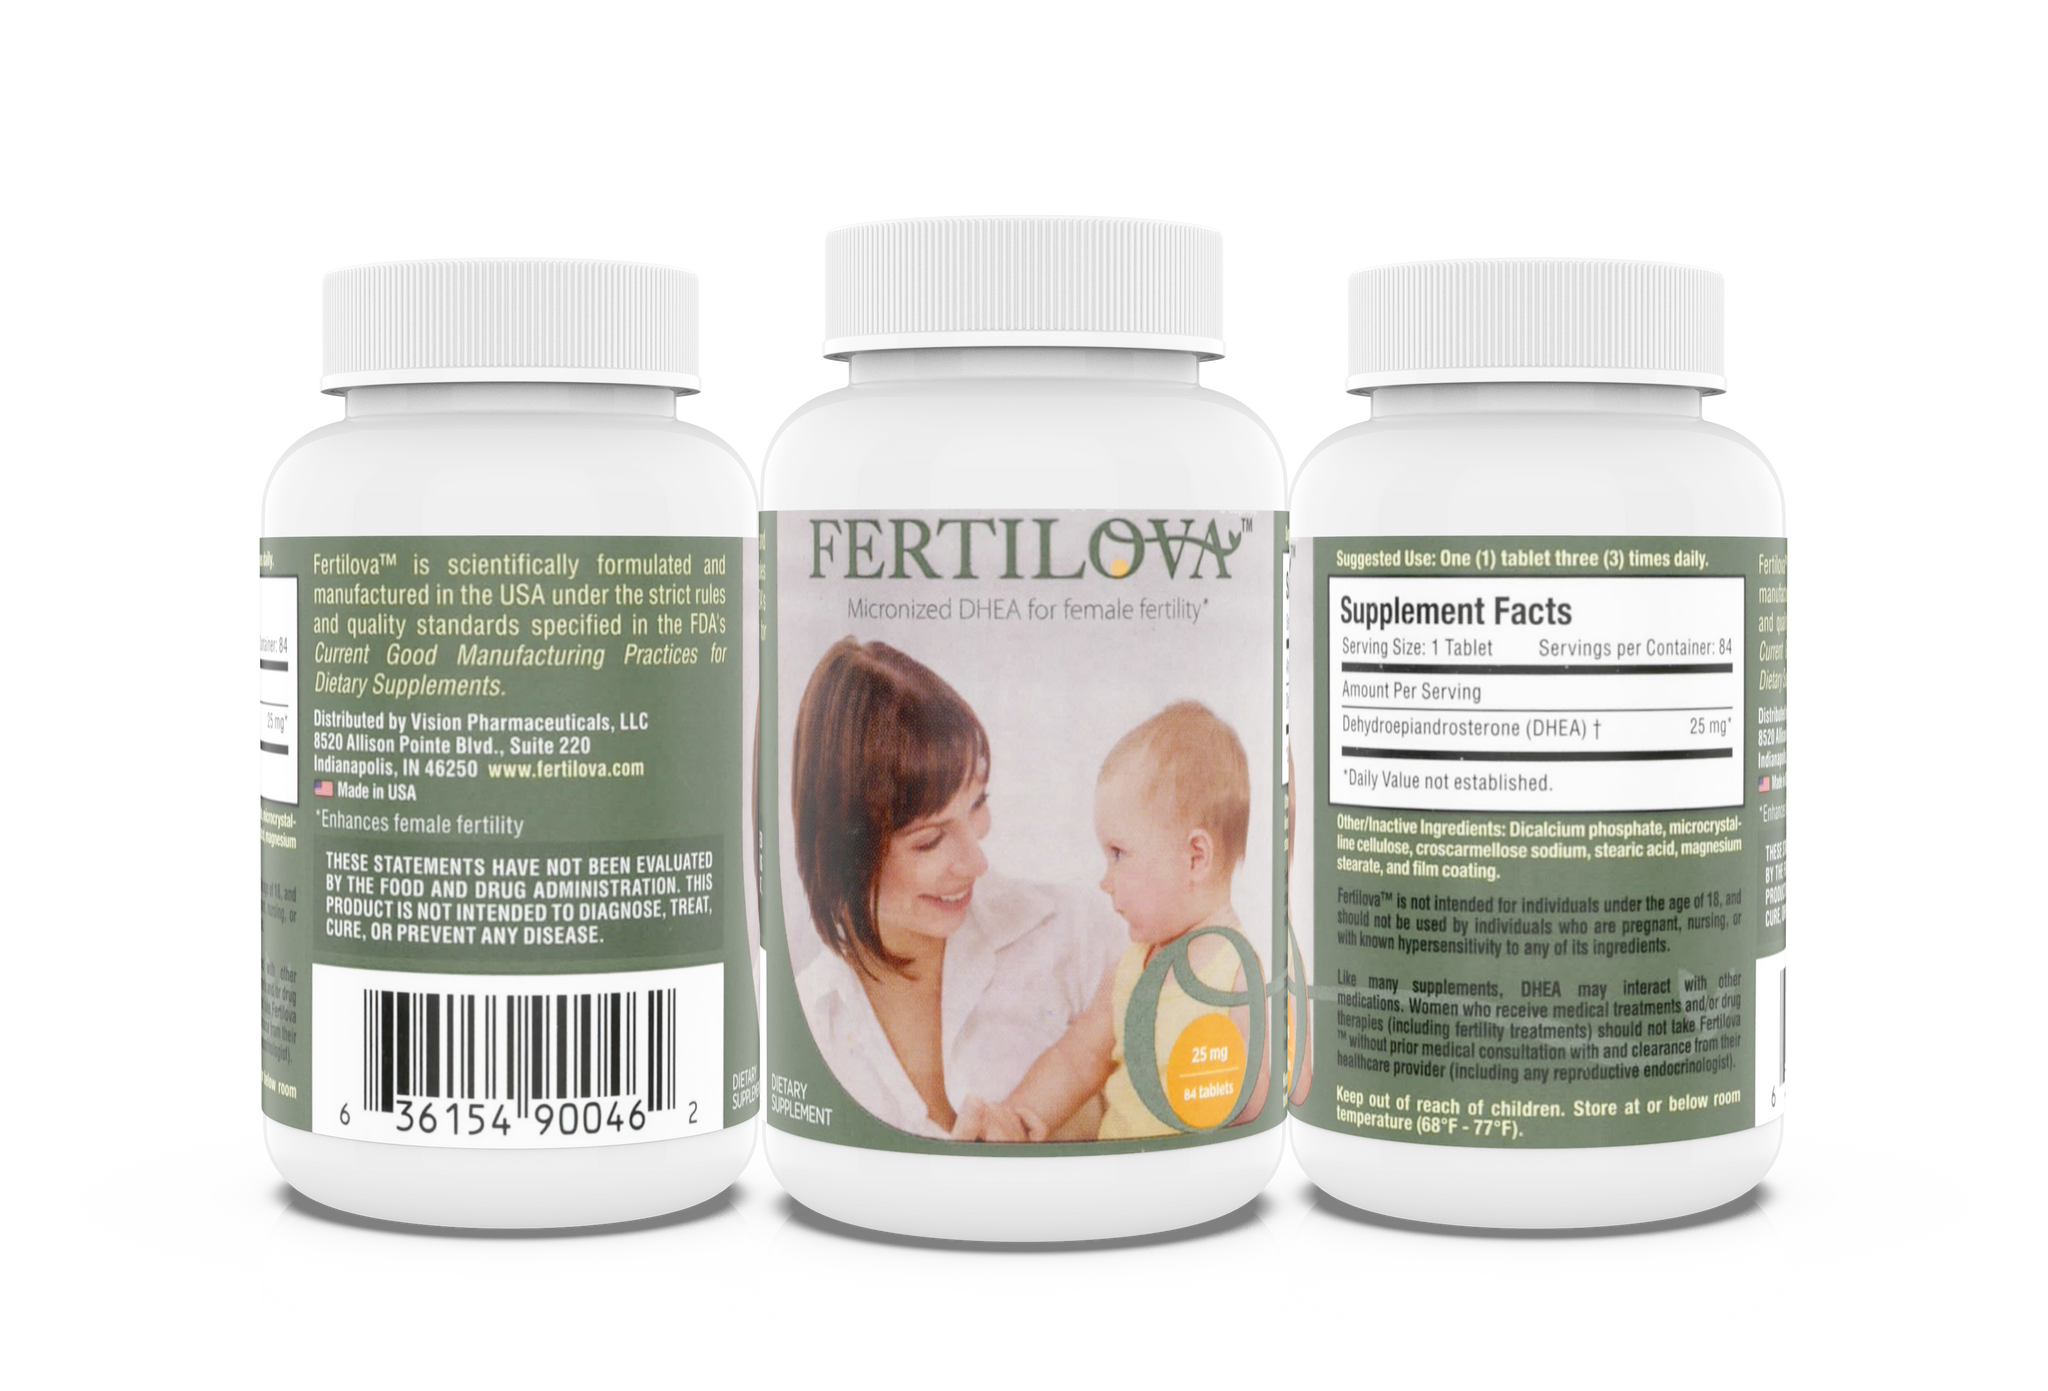 Fertilova® Micronized DHEA Supplement for Women